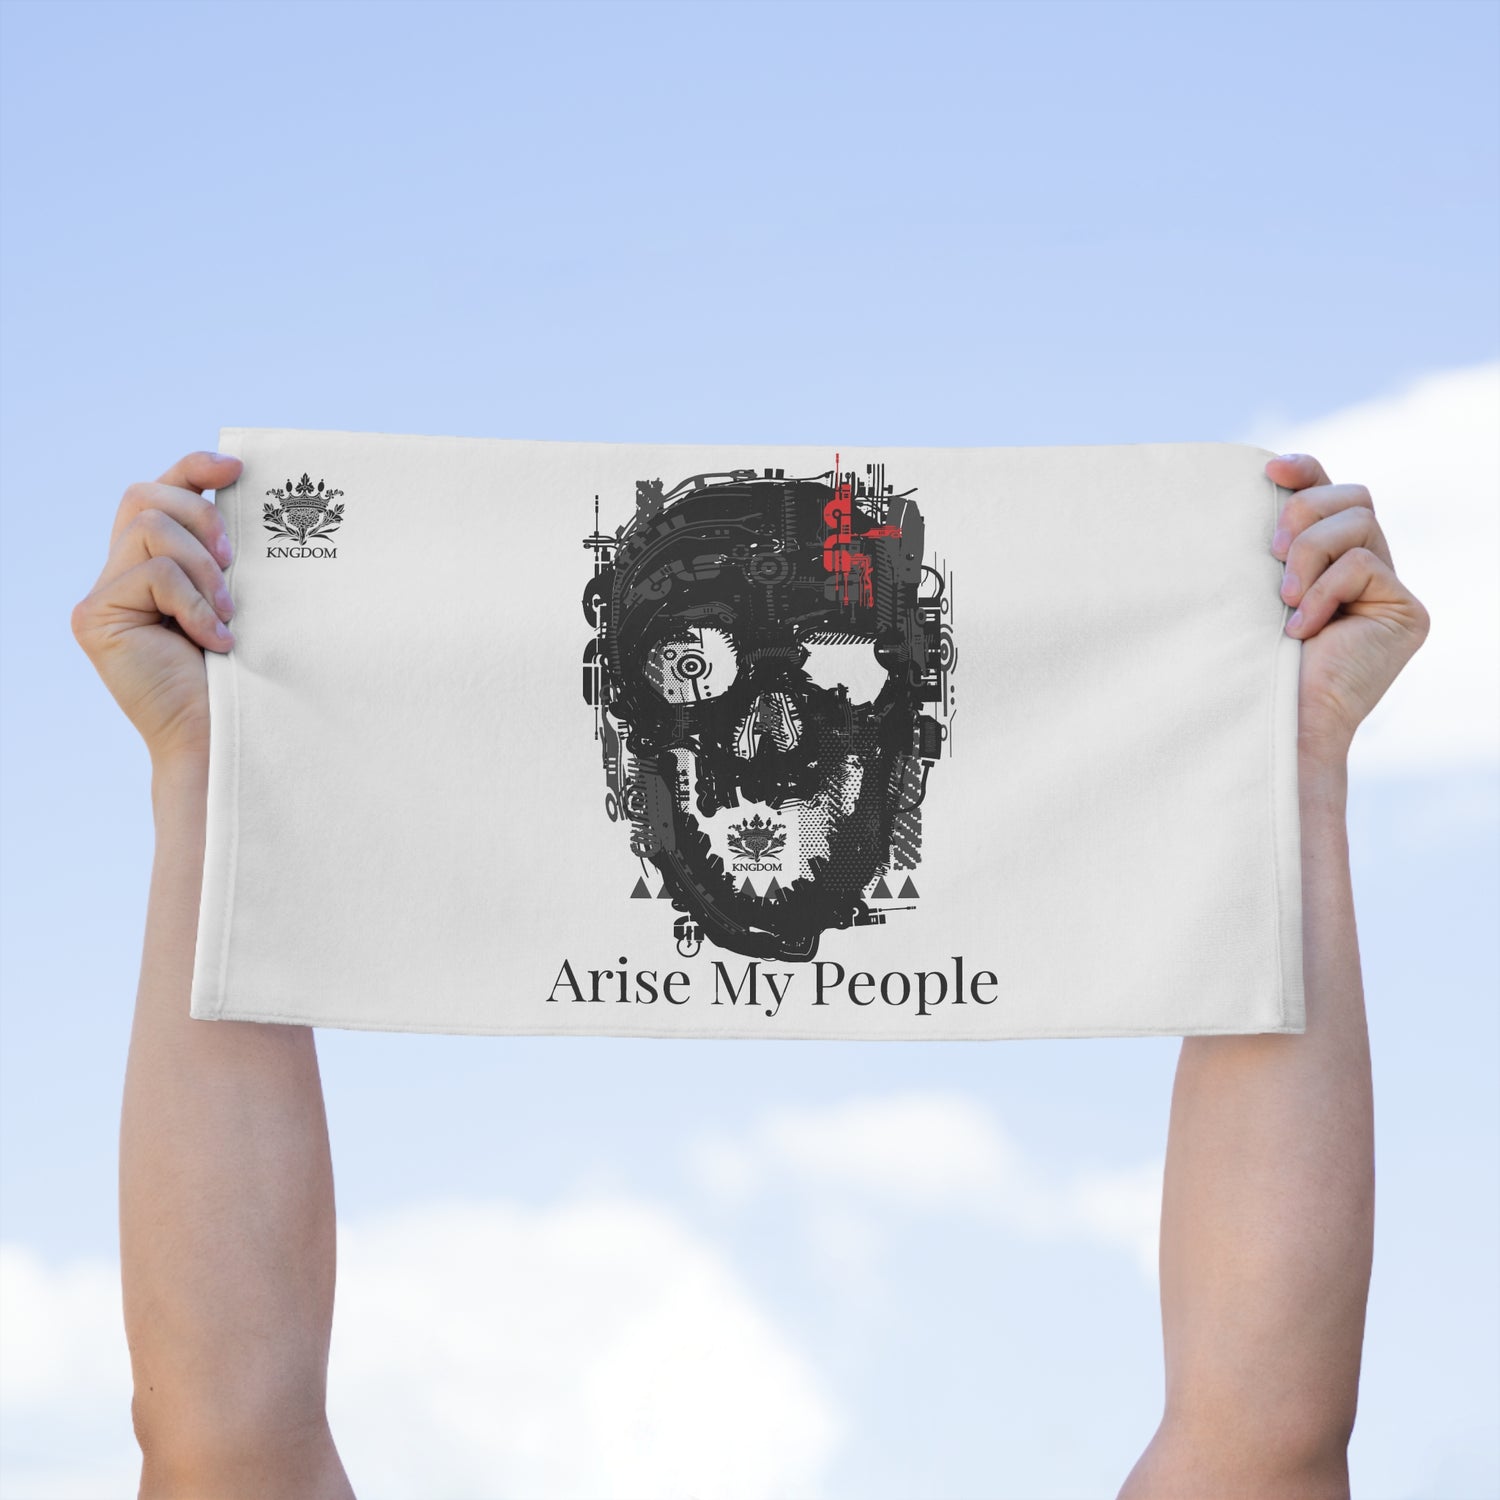 EZEKIEL 37 &quot;Arise My People&quot; Skull Cyborg Design Image- Rally Towel (&quot;Arise My People&quot; Black Letter Print W/Back Side Black Kngdom Logo)